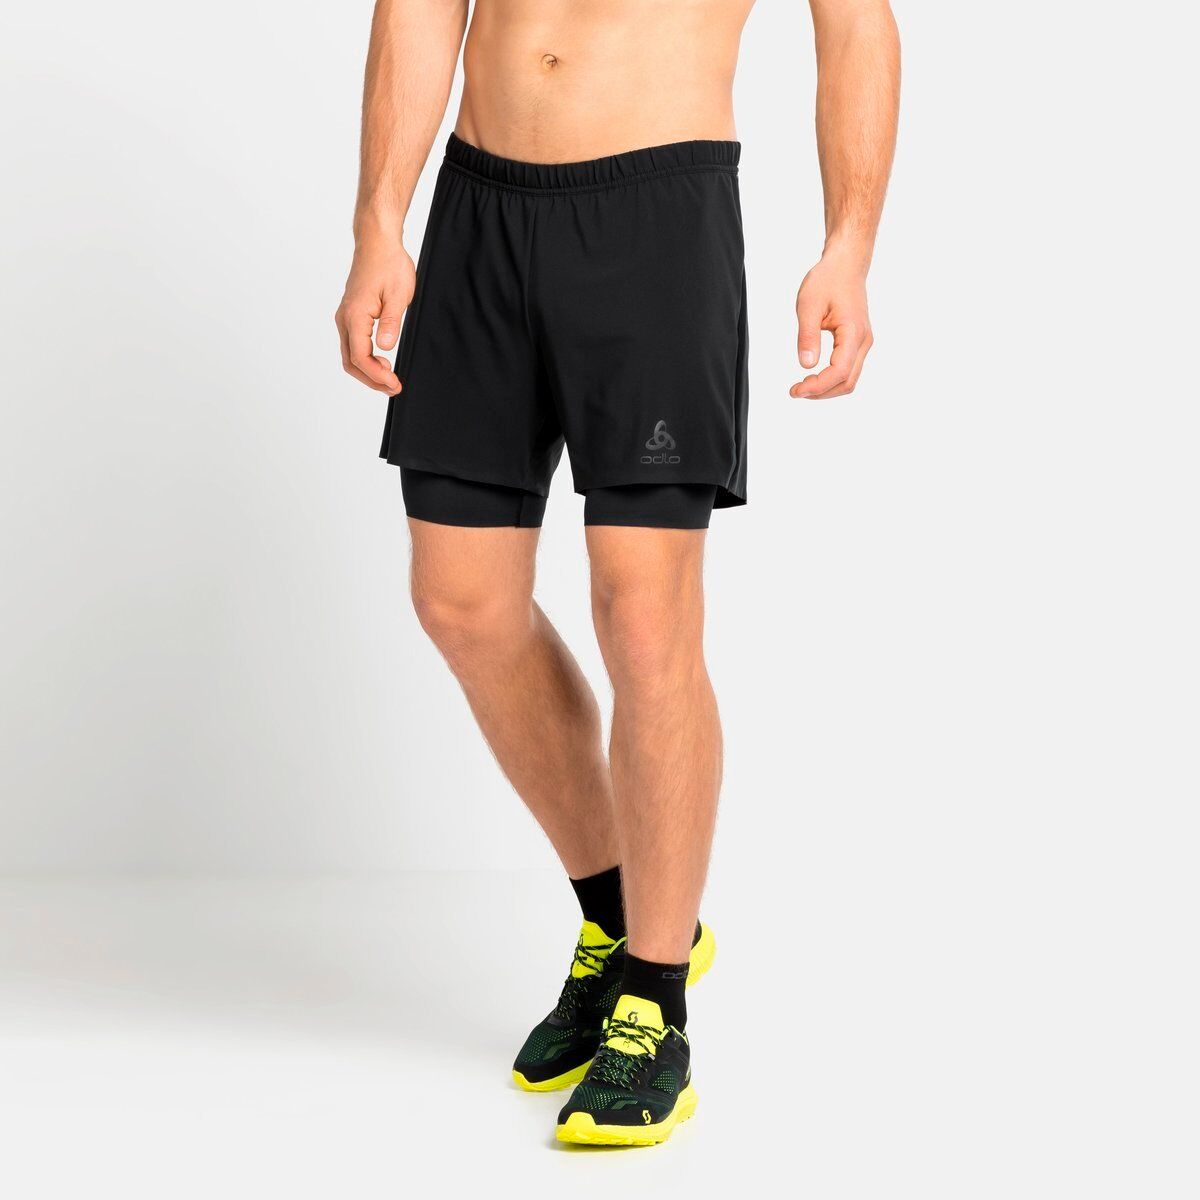 Odlo 2-In-1 Shorts Zeroweight 5 Inch - Running shorts - Men's